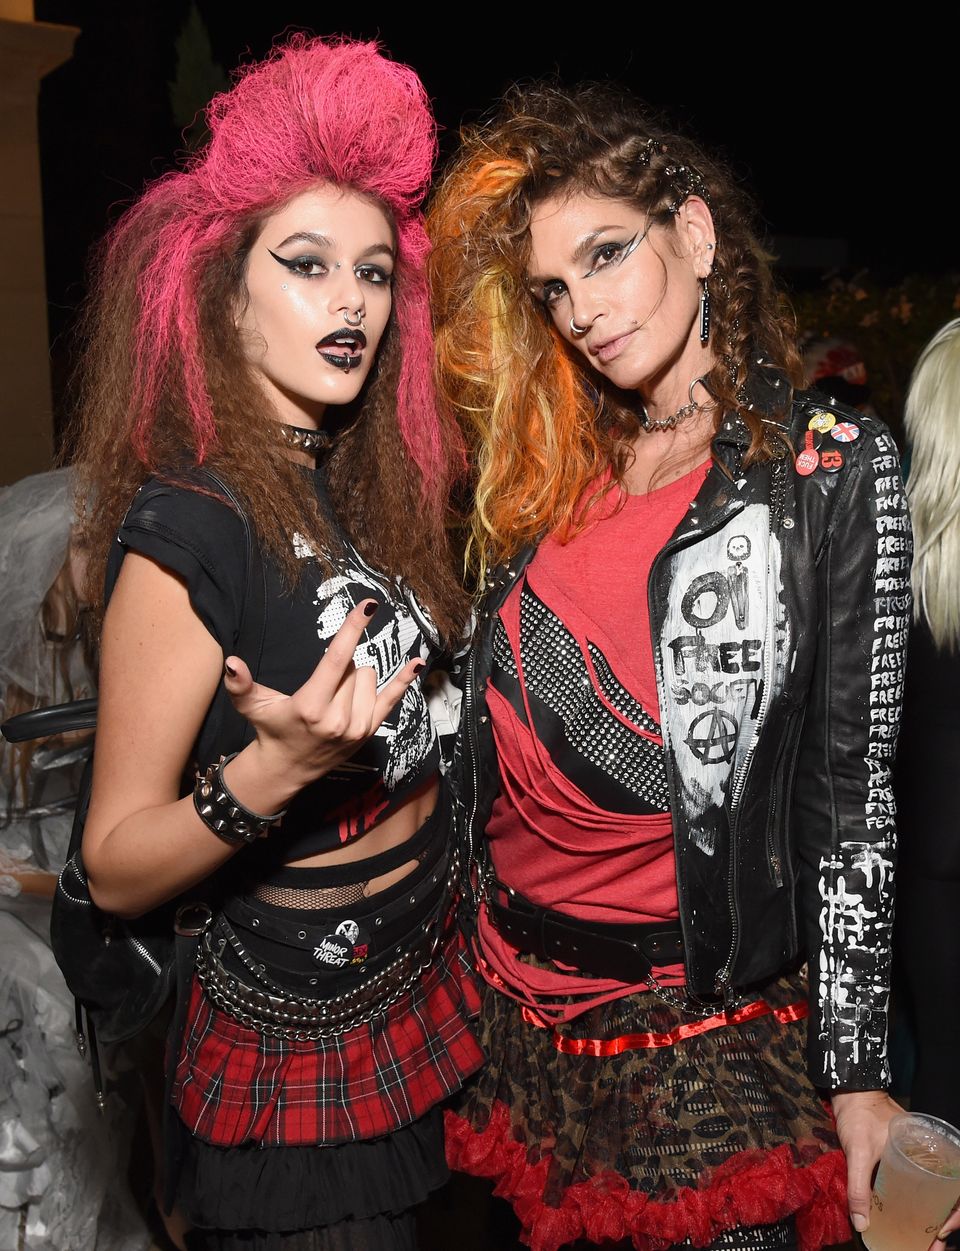 Kaia Gerber and Cindy Crawford as punks